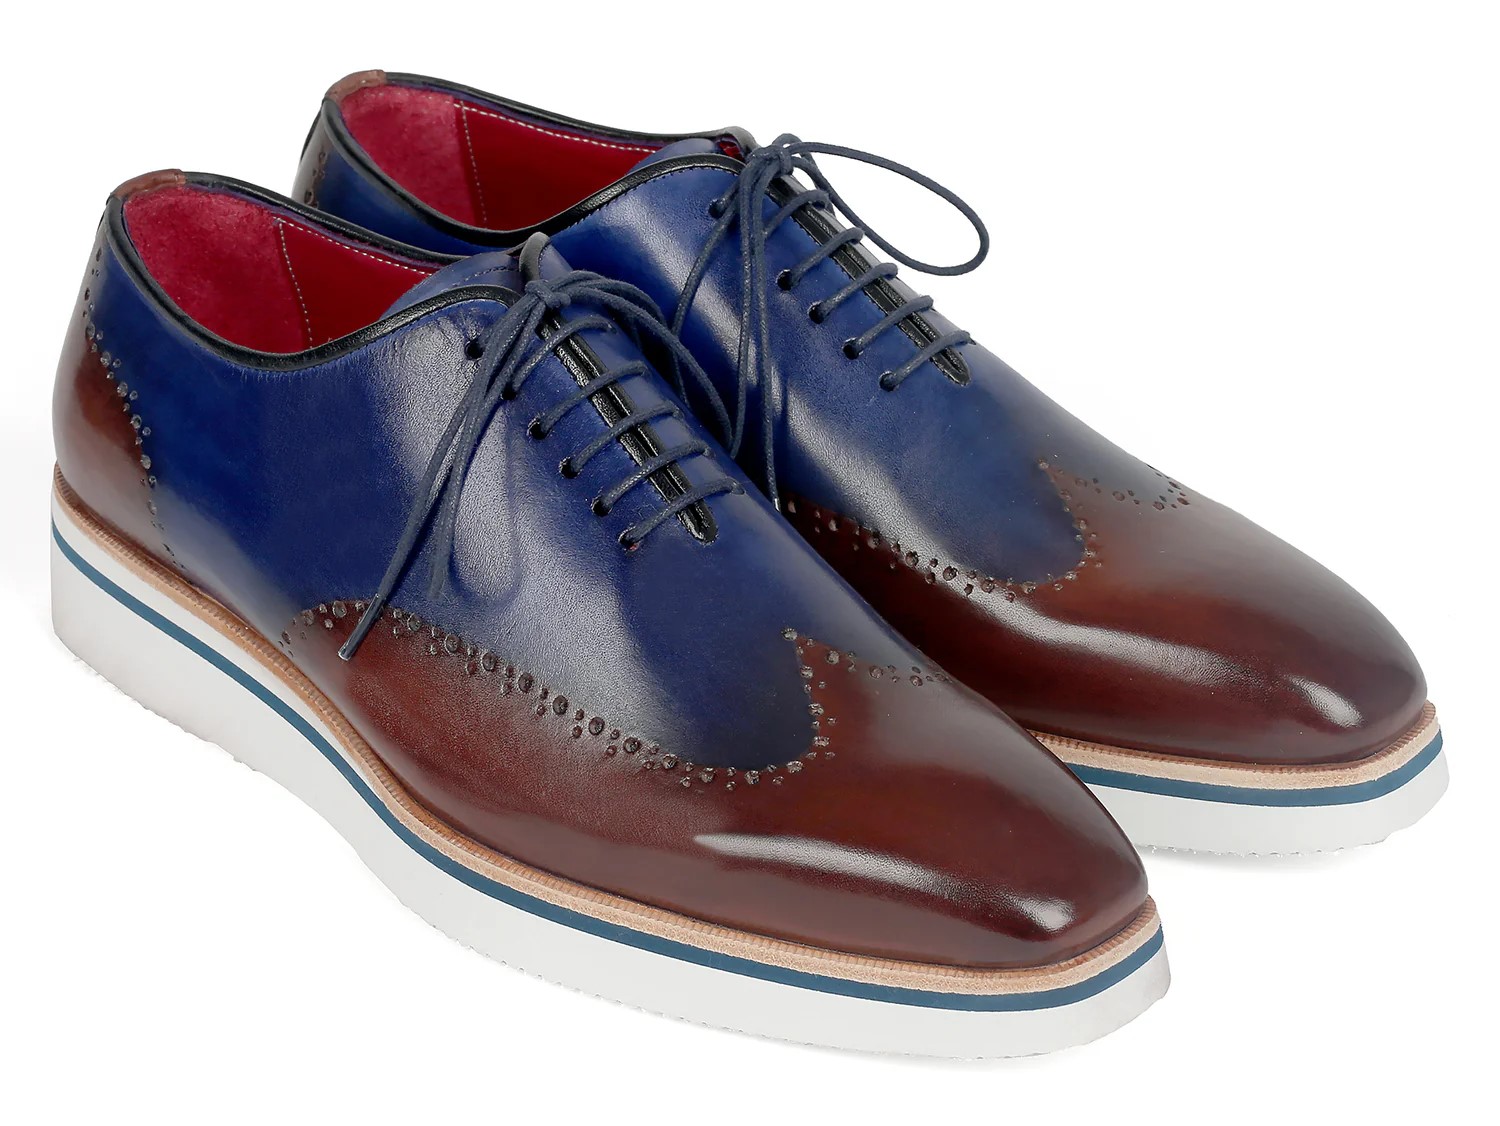 Paul Parkman Brown / Blue Genuine Leather Men's Smart Wingtip Oxford Casual Shoes 187-BRW-BLU